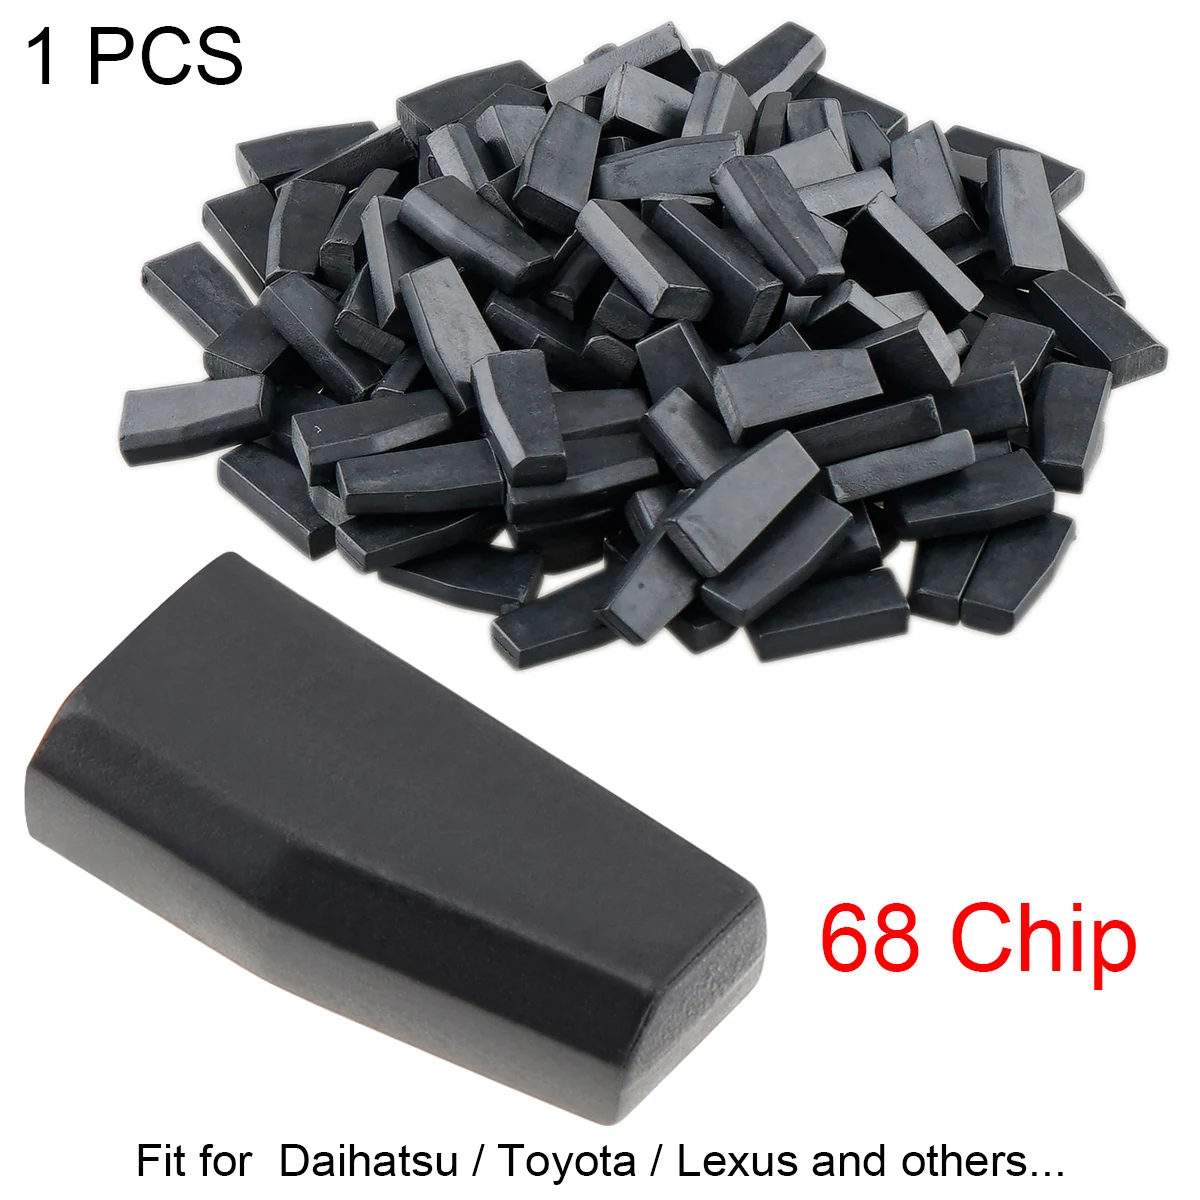 Blank 4D68 ID68 40Bits Car Light Carbon Chip Automobile Key Transponder Chips Fit for Da-ihatsu Toyota Lexus Replacement Parts